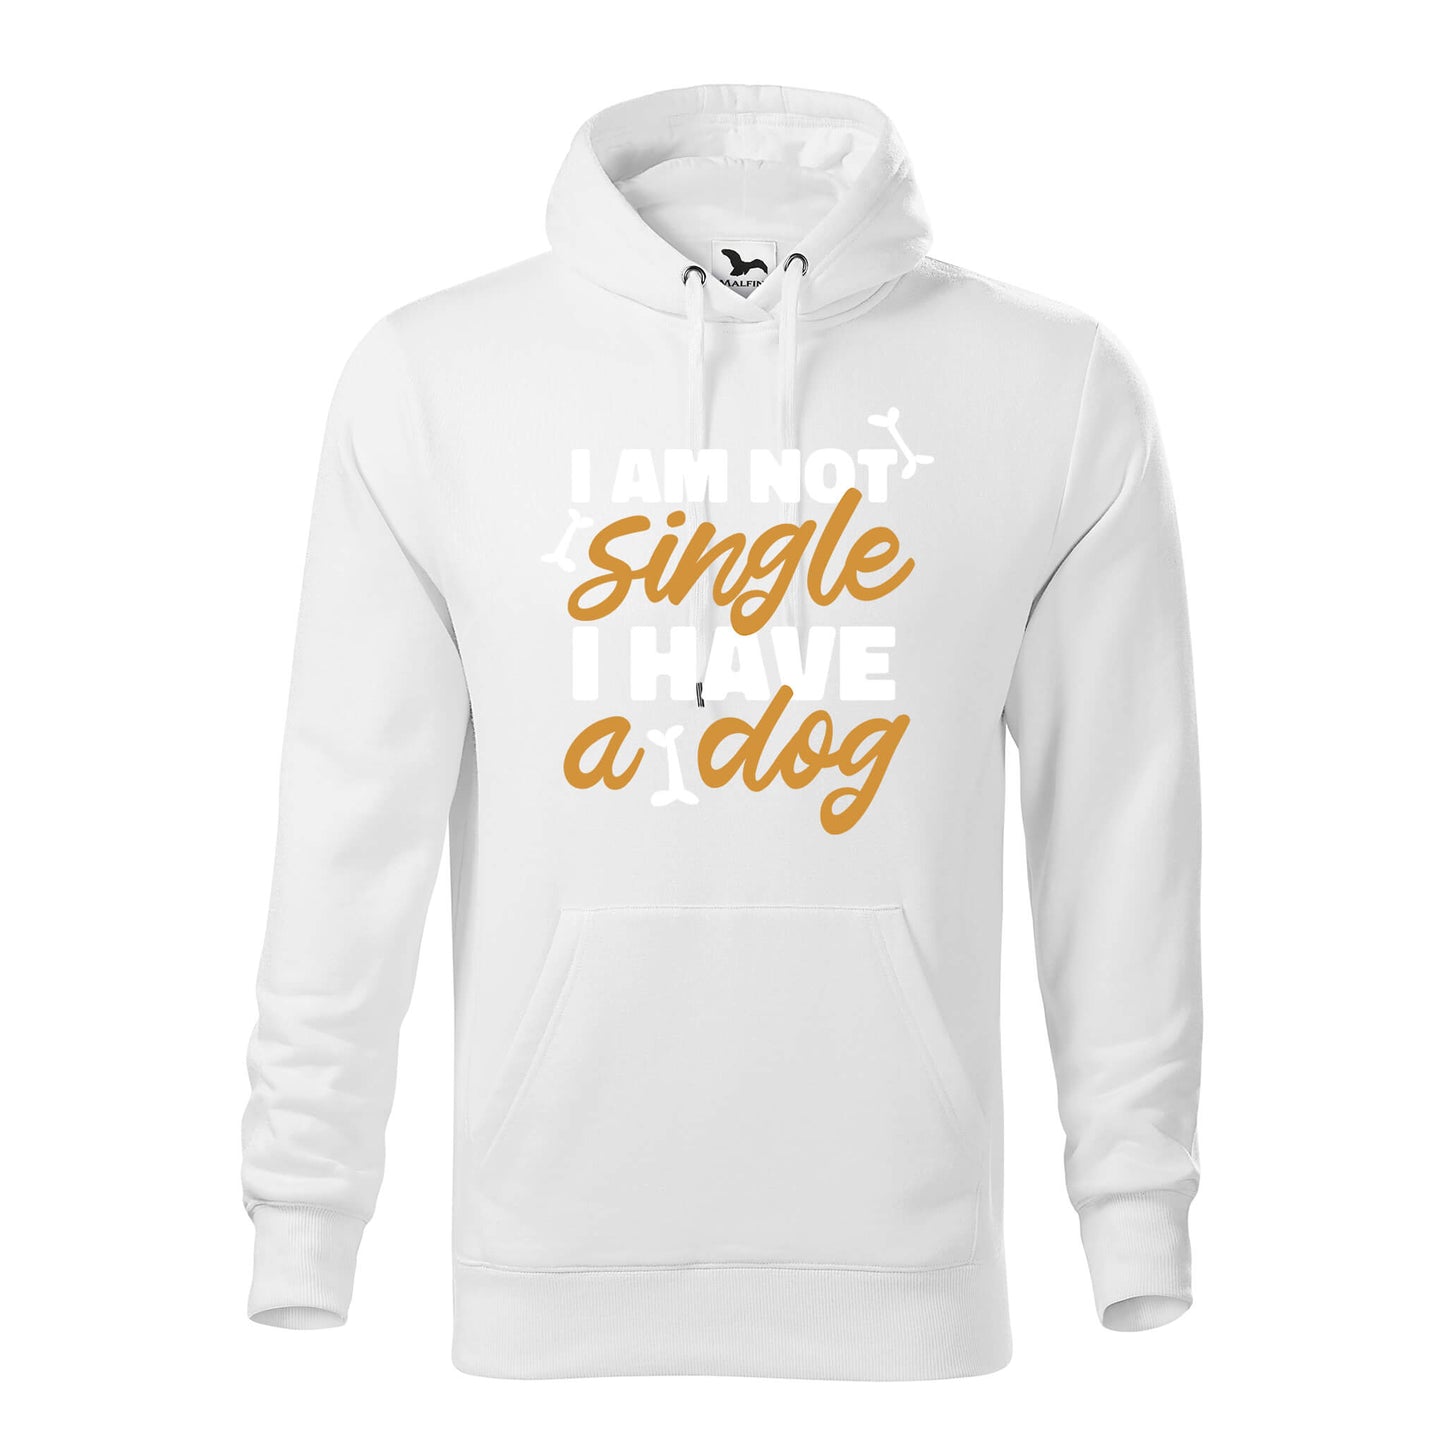 Im not single i have a dog hoodie - rvdesignprint